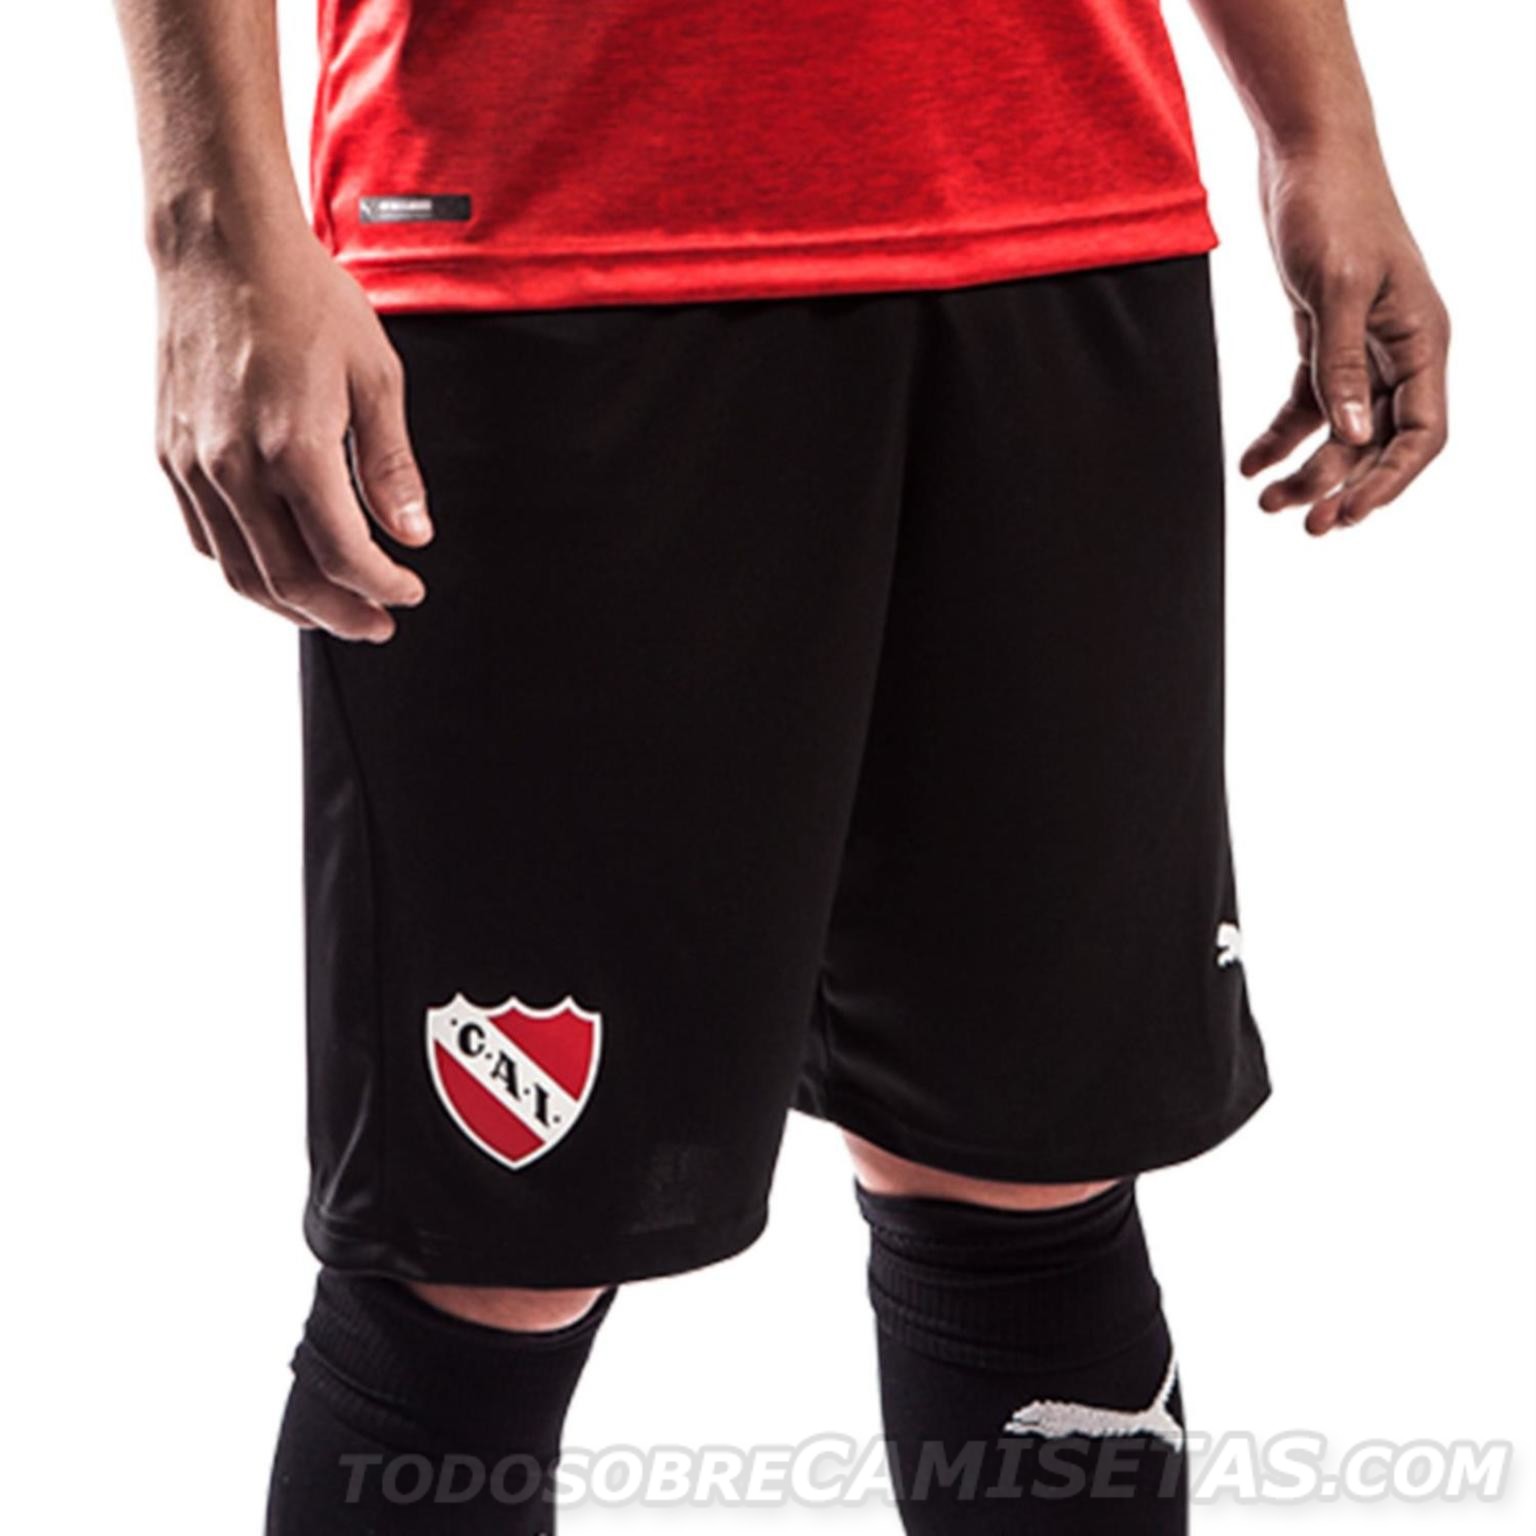 Camisetas PUMA de Independiente 2018-19